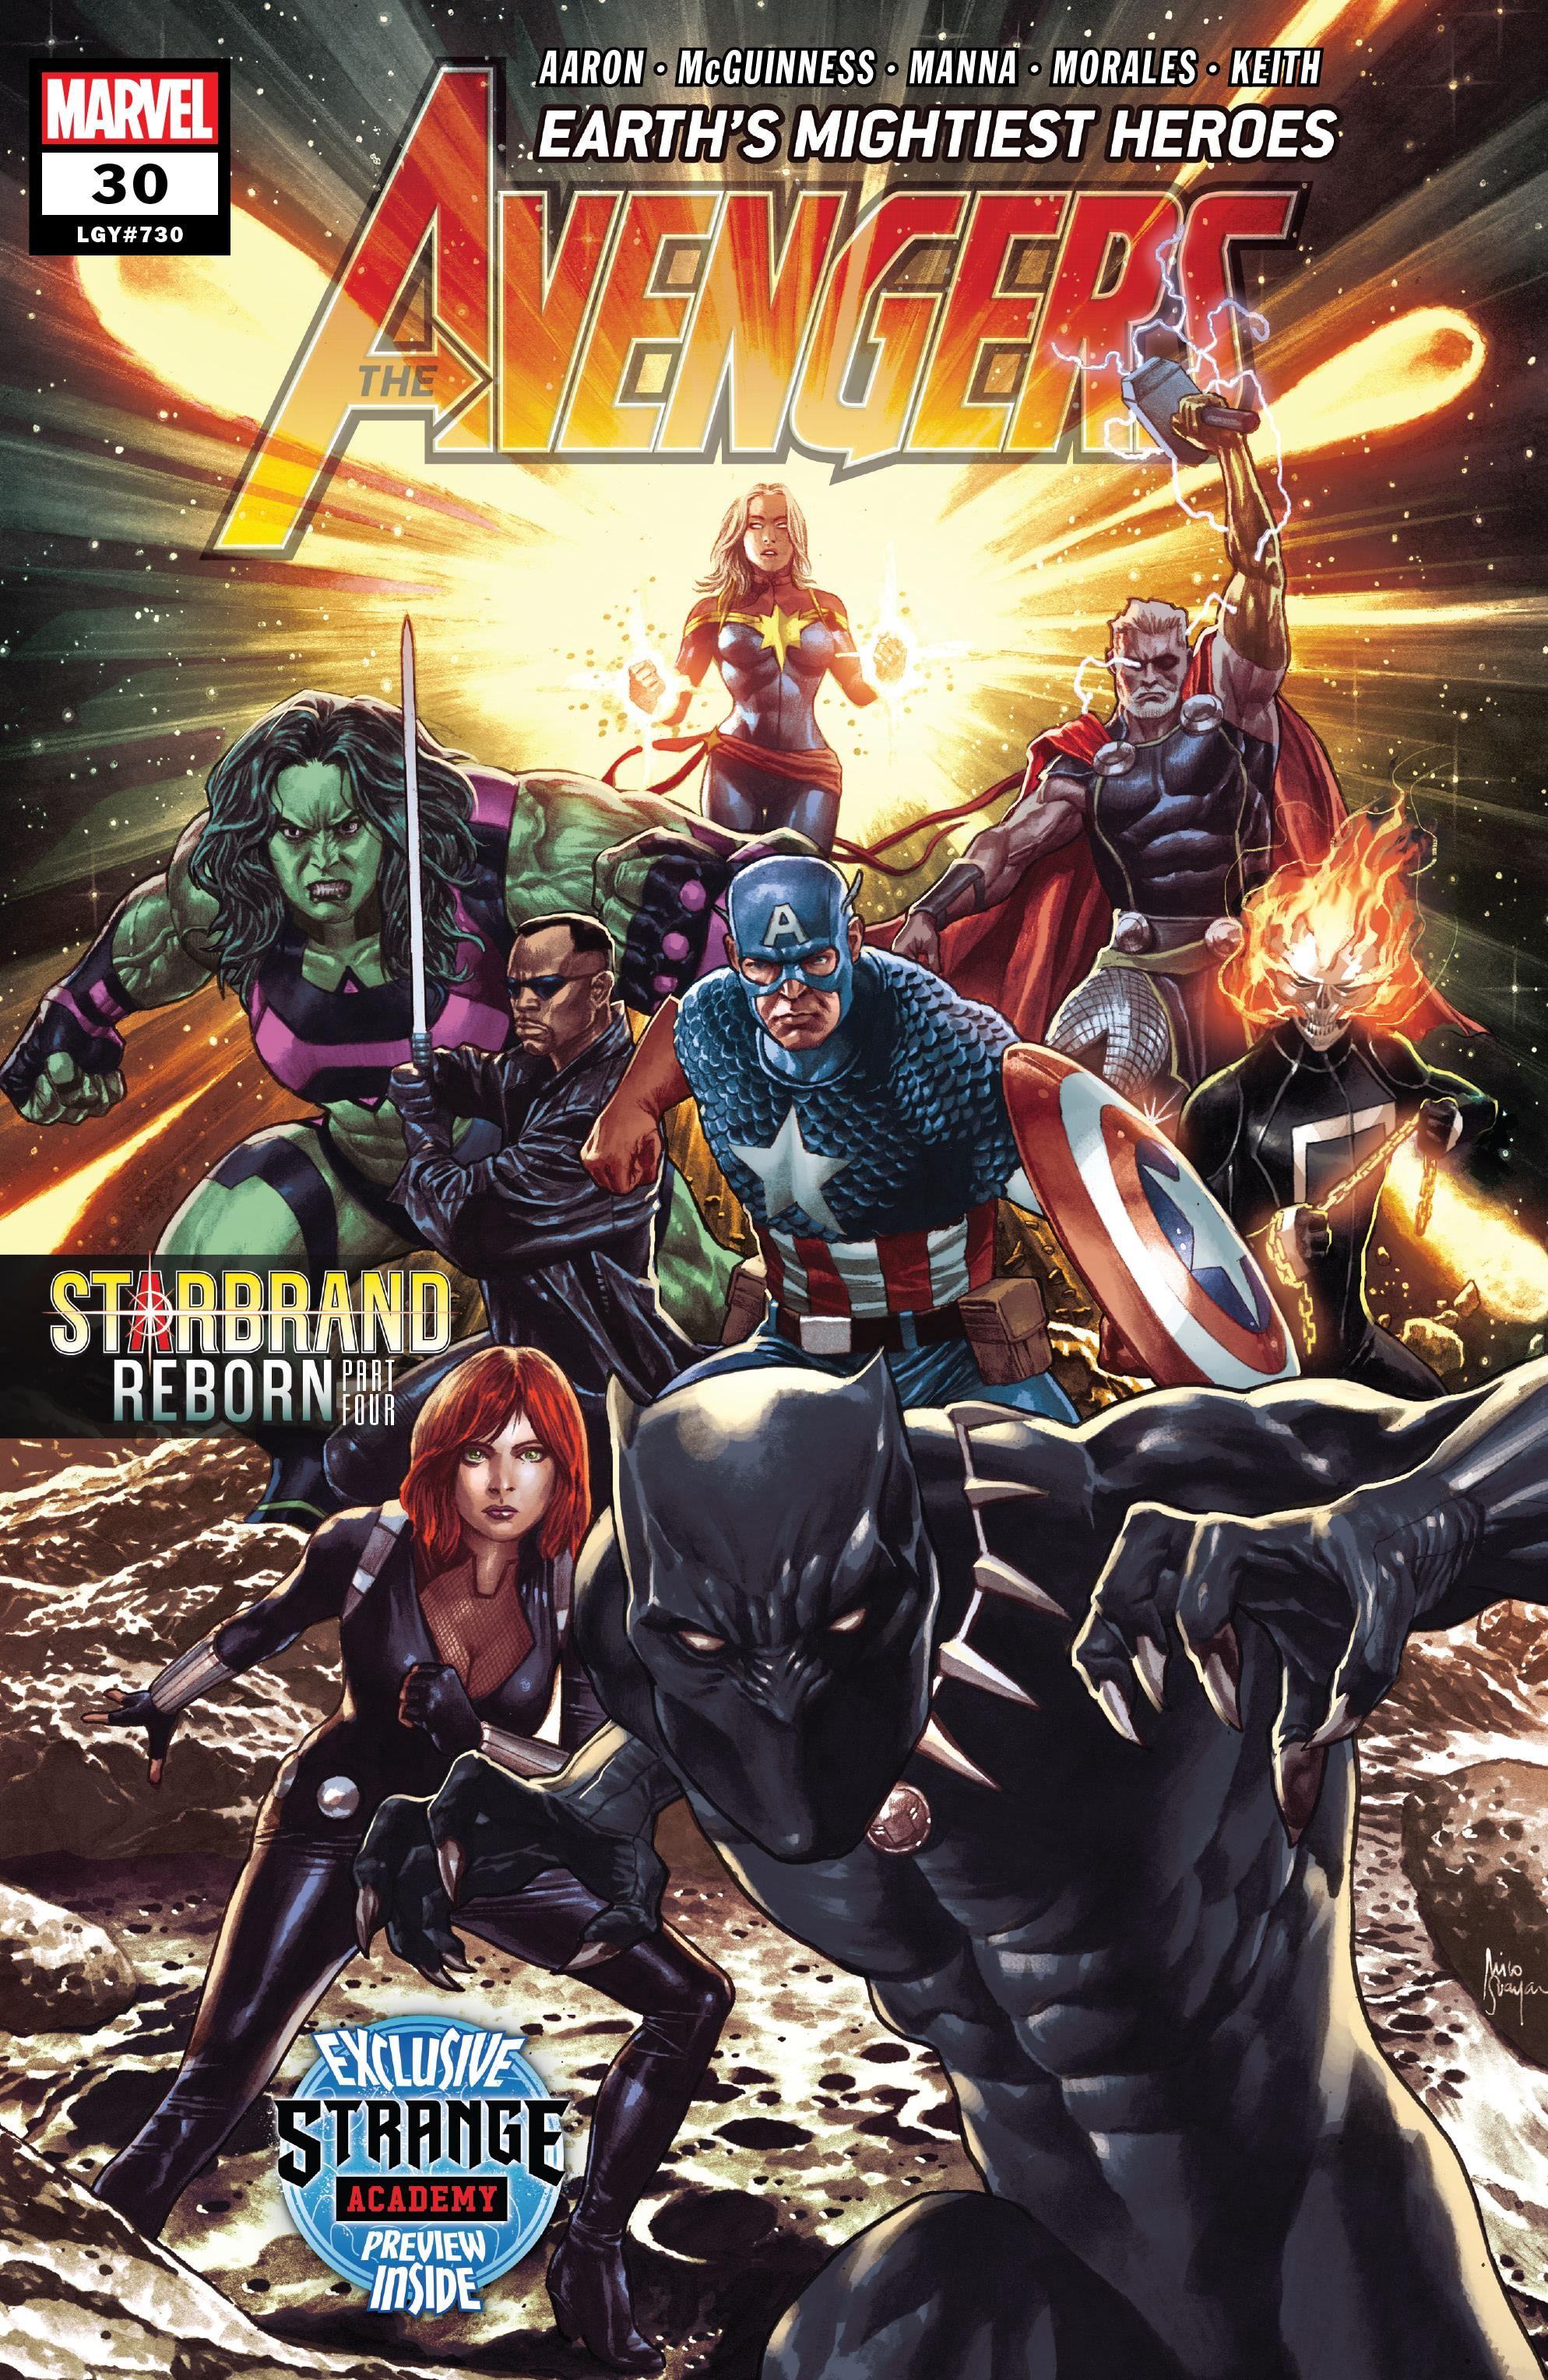 The Avengers Vol. 8 #30